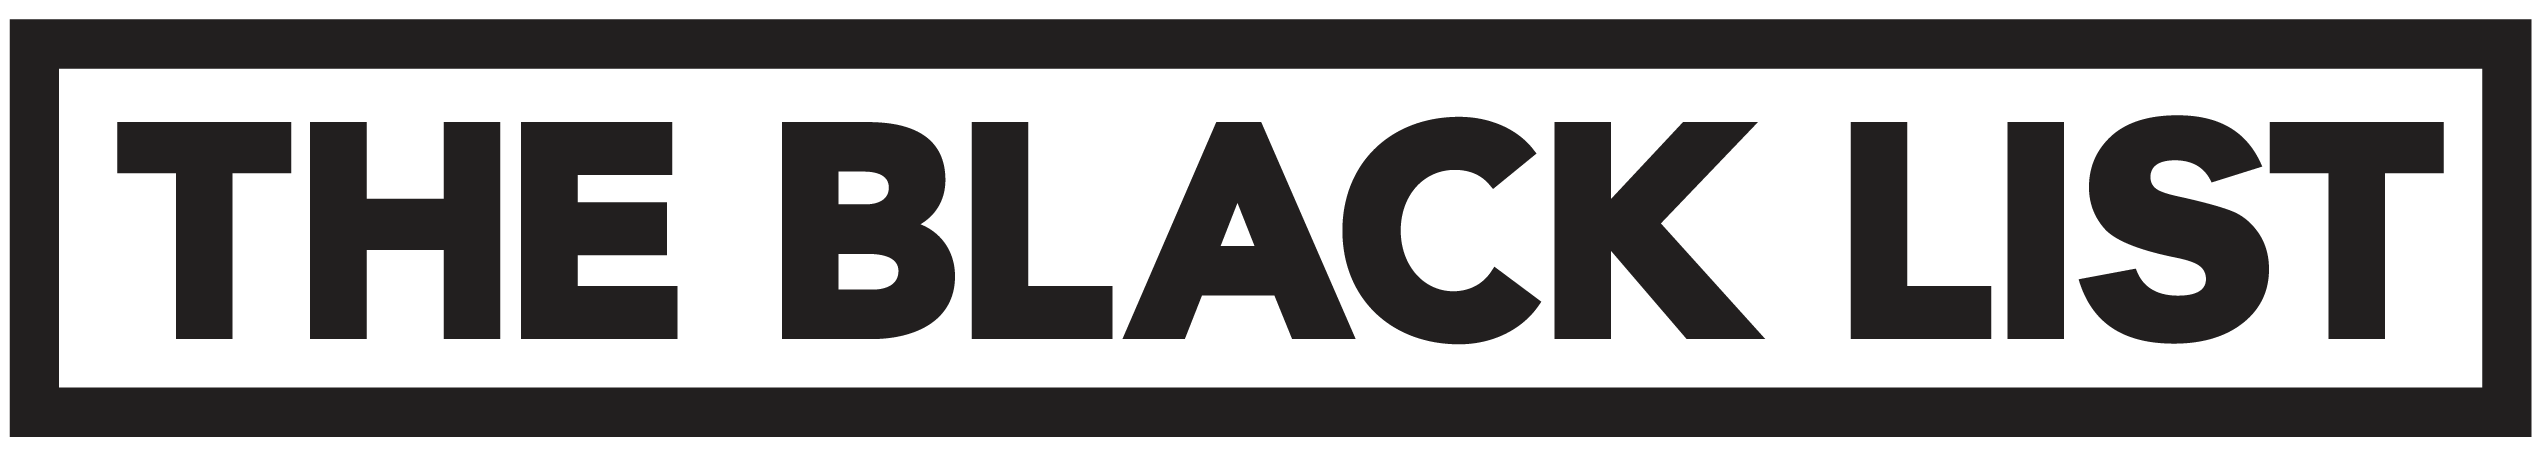 Black List logo